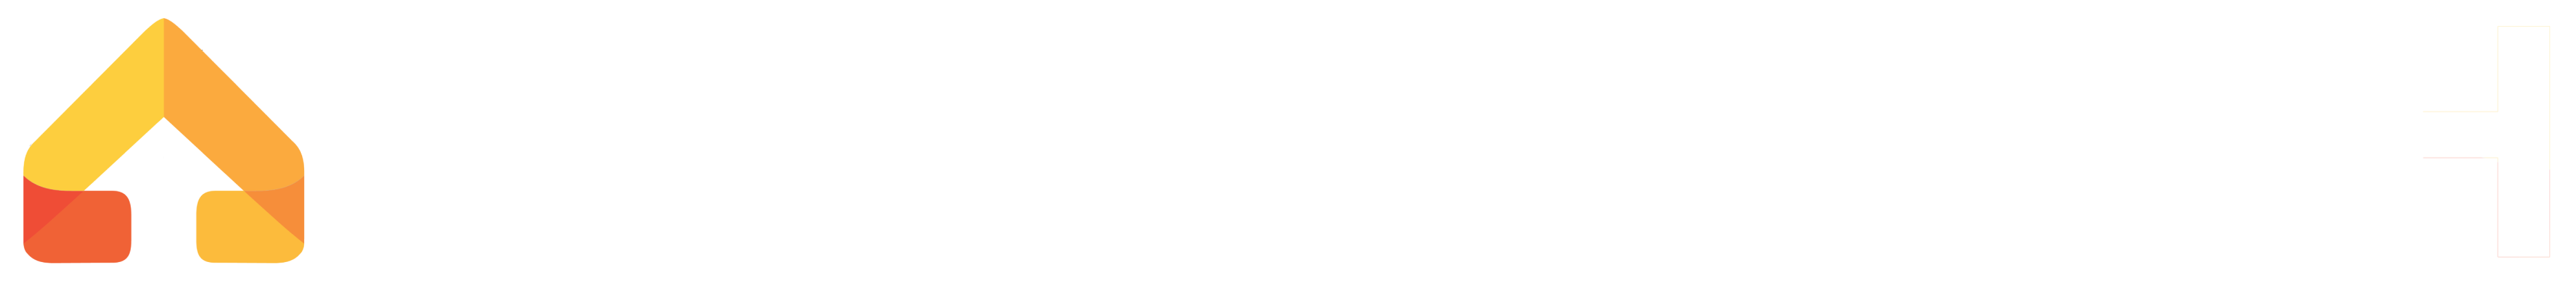 sunprotech-logo-white